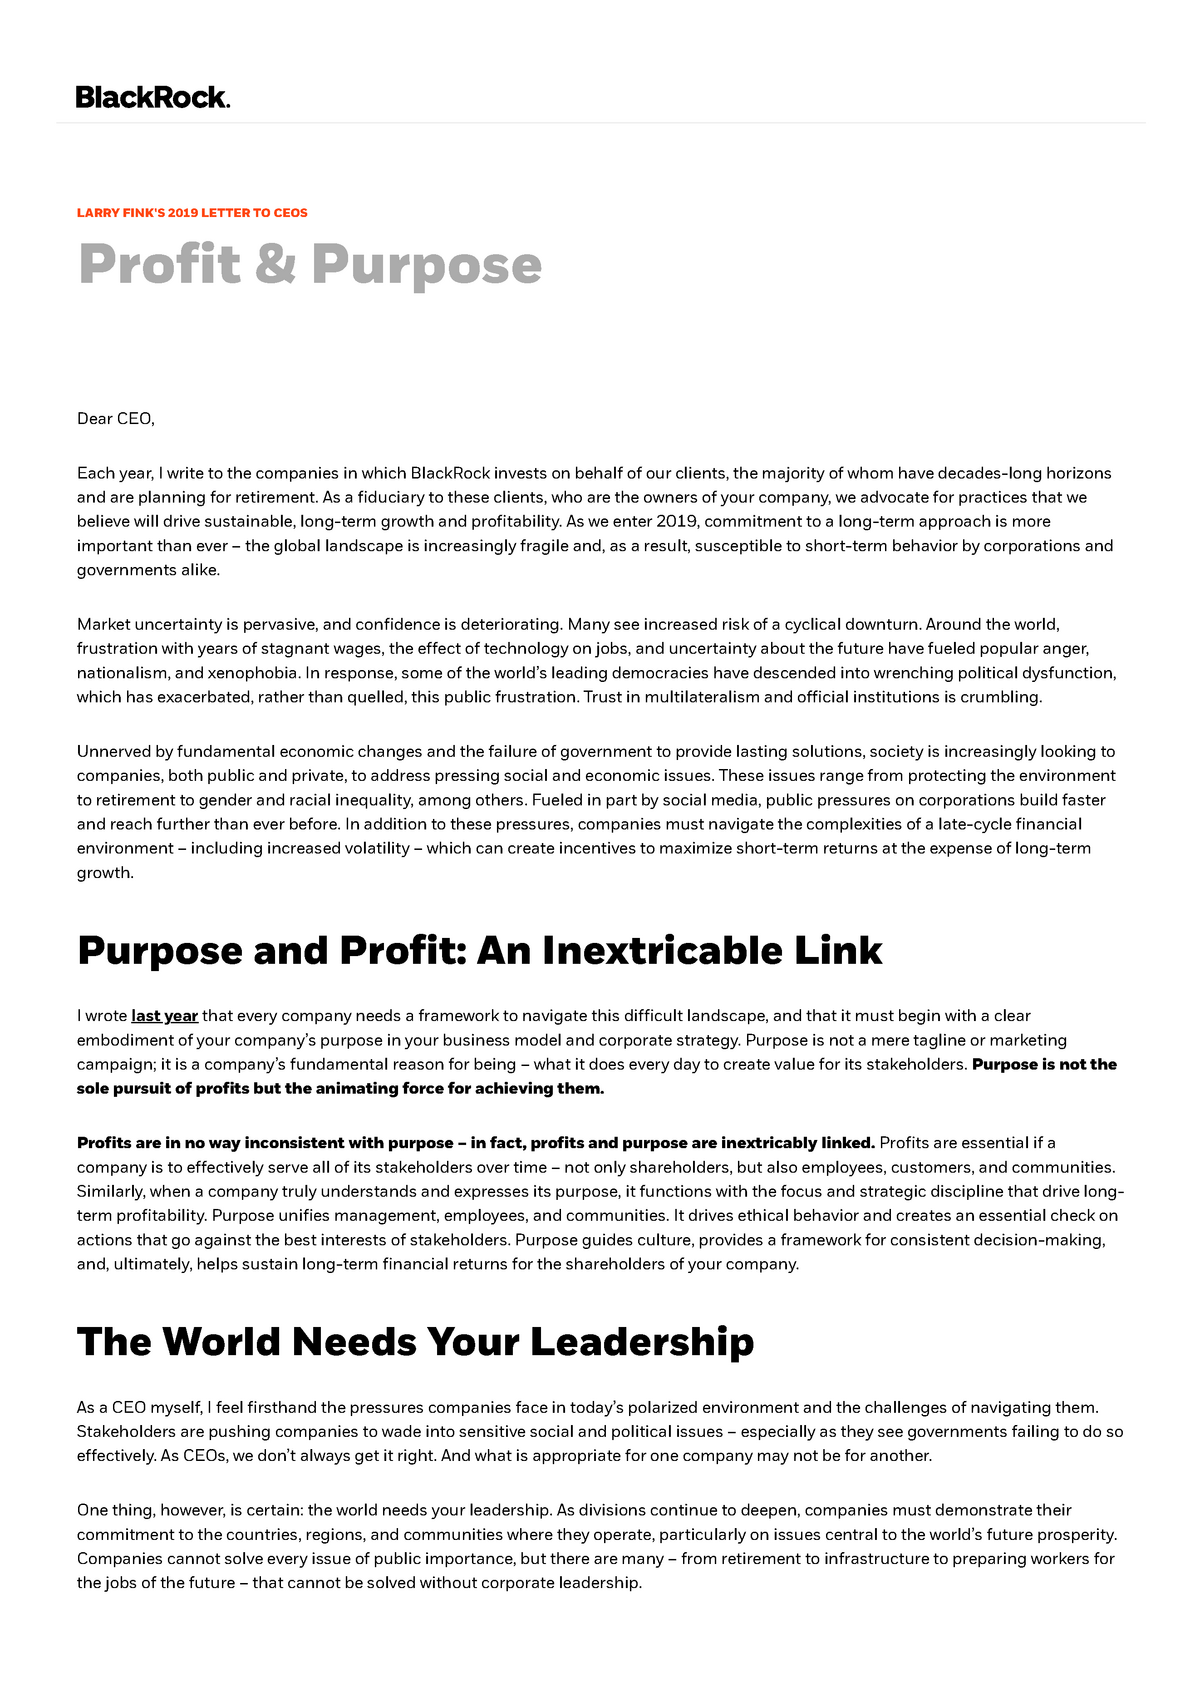 Larry Fink's Letter LARRY FINK'S 2019 LETTER TO CEOS Pro t & Purpose